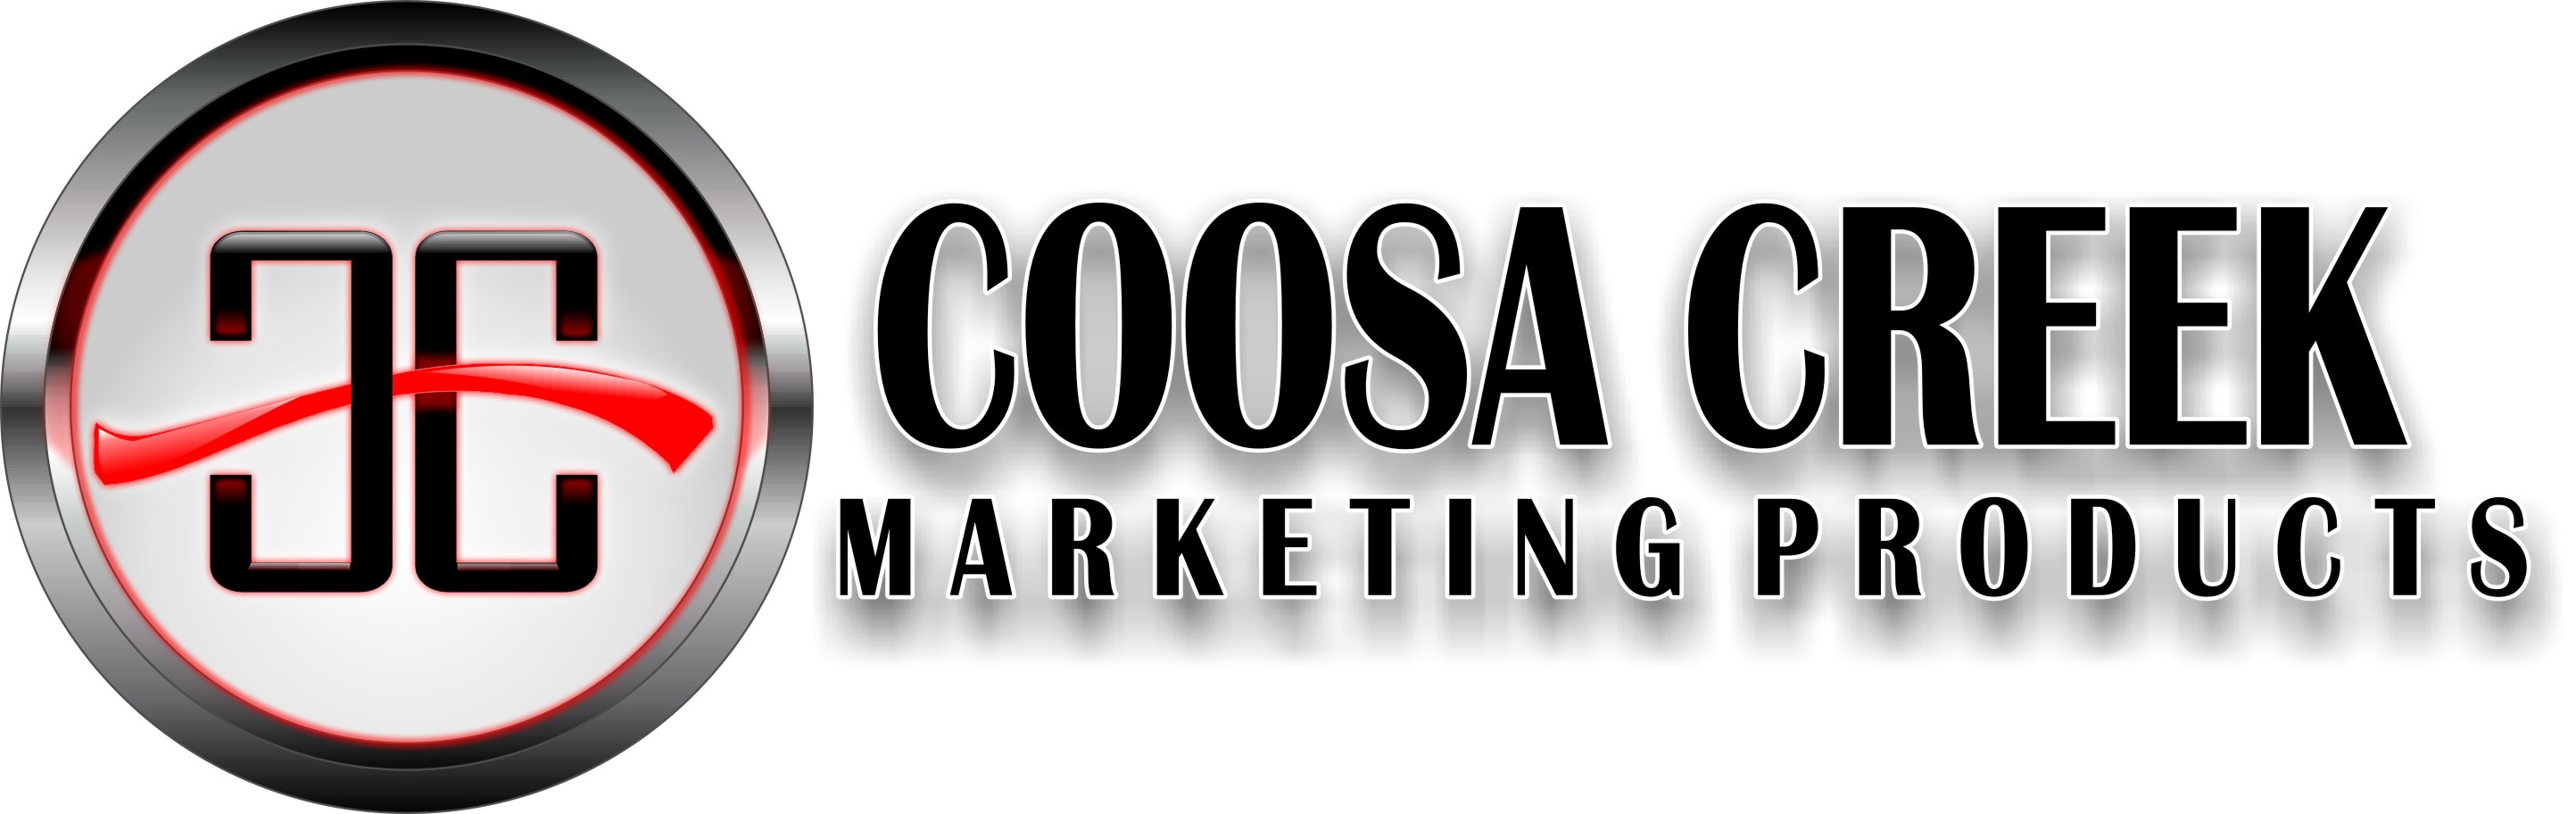 Coosa Creek Marketing Products's Logo